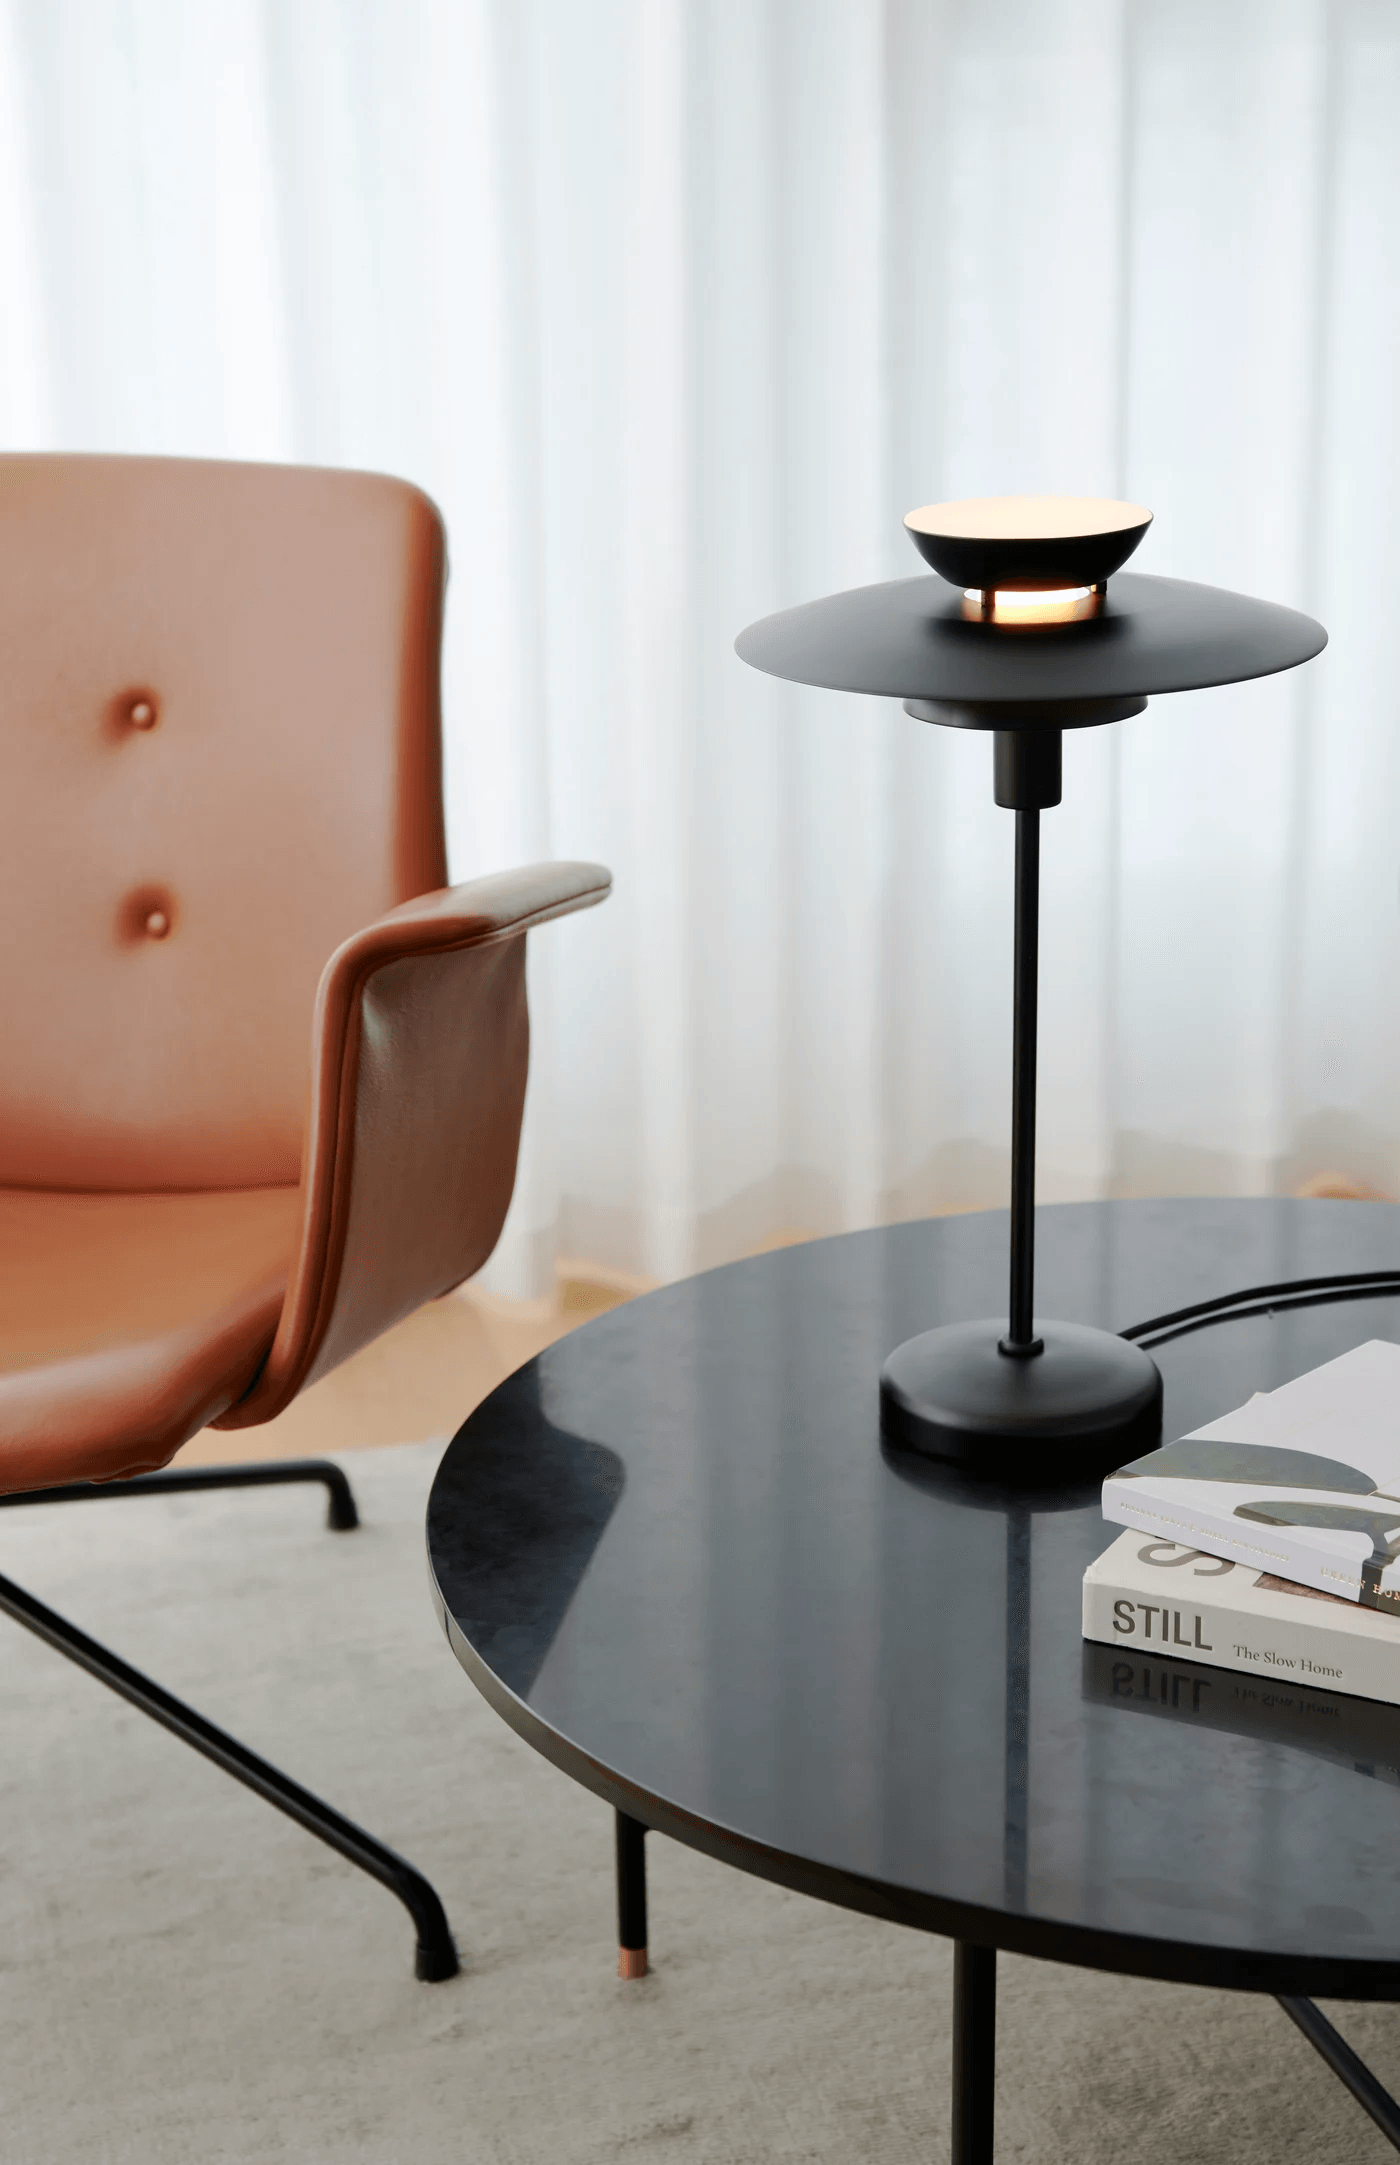 Lampa stołowa CARMEN czarny Nordlux    Eye on Design